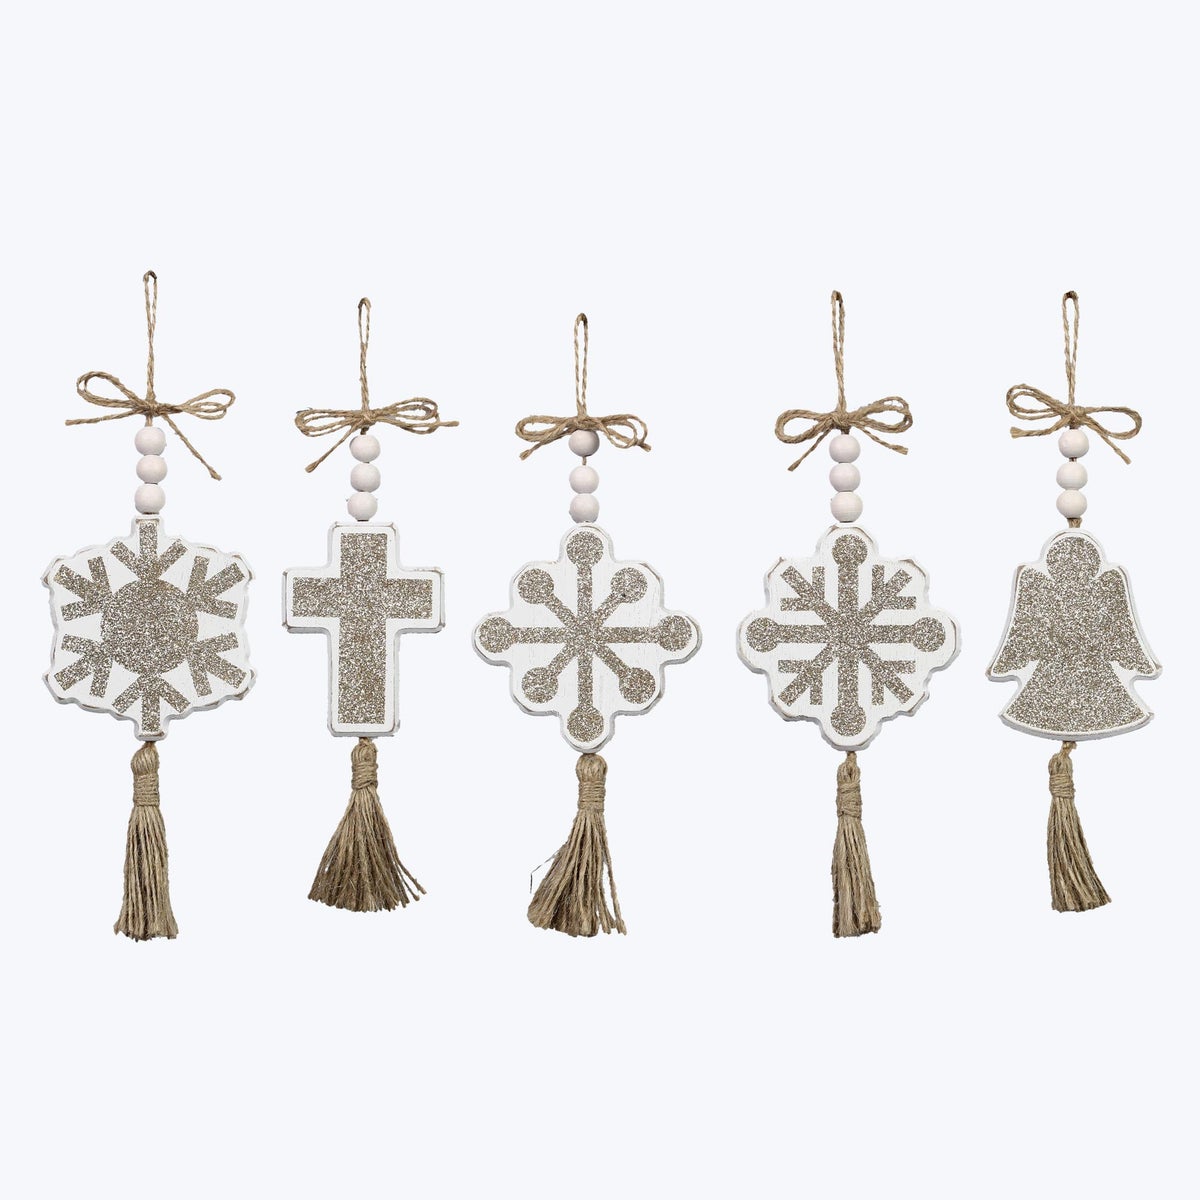 Wood White Winter Snow Ornaments. 5 Assortment